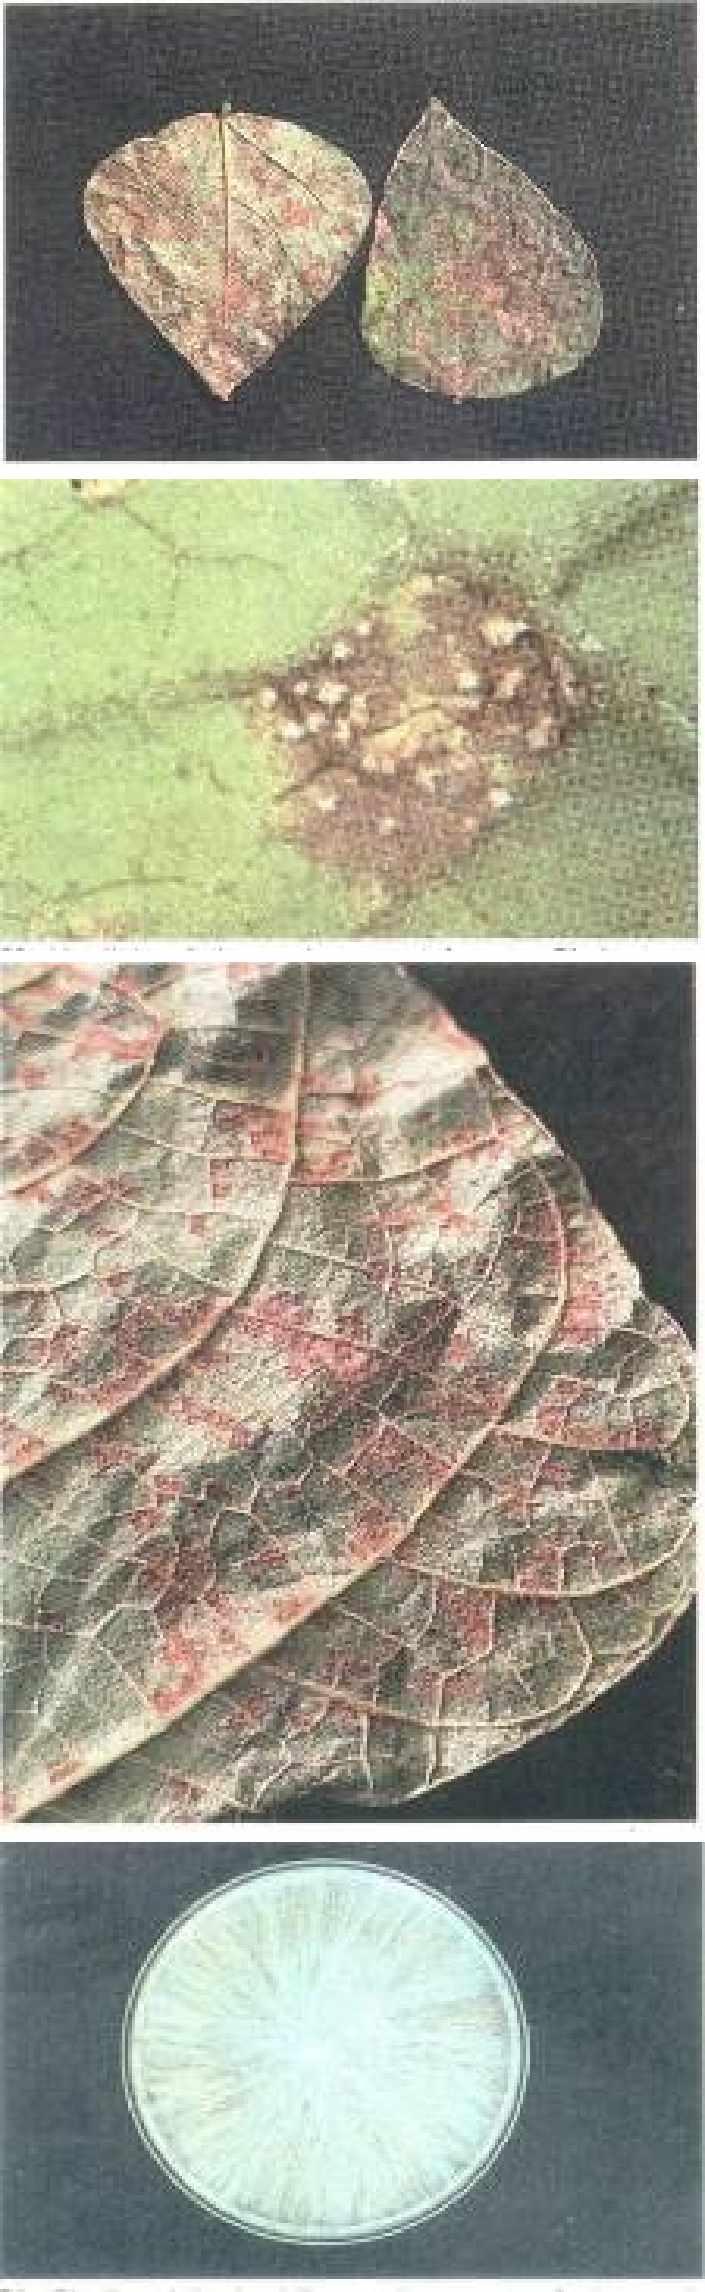 80 Soybean rust on leaf, caused by Phakopsora pachyrhizi 81 Uredinia of the soybean rust fungus Phakopsora pachyrhizi 82